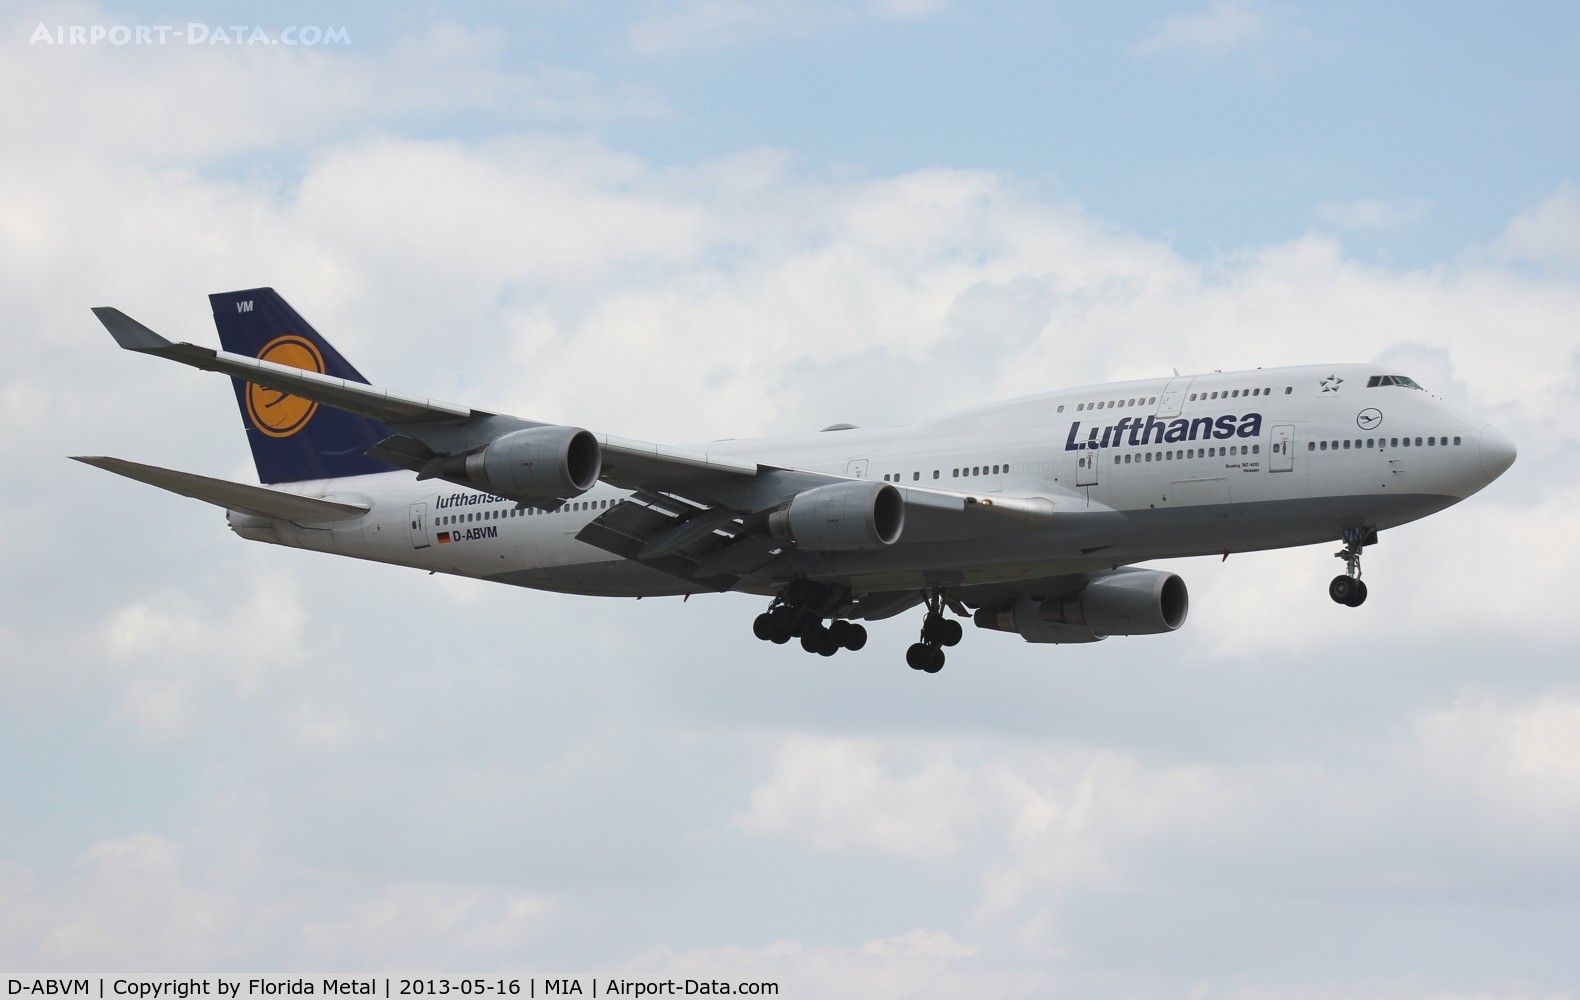 D-ABVM, 1998 Boeing 747-430 C/N 29101, Lufthansa 747-400